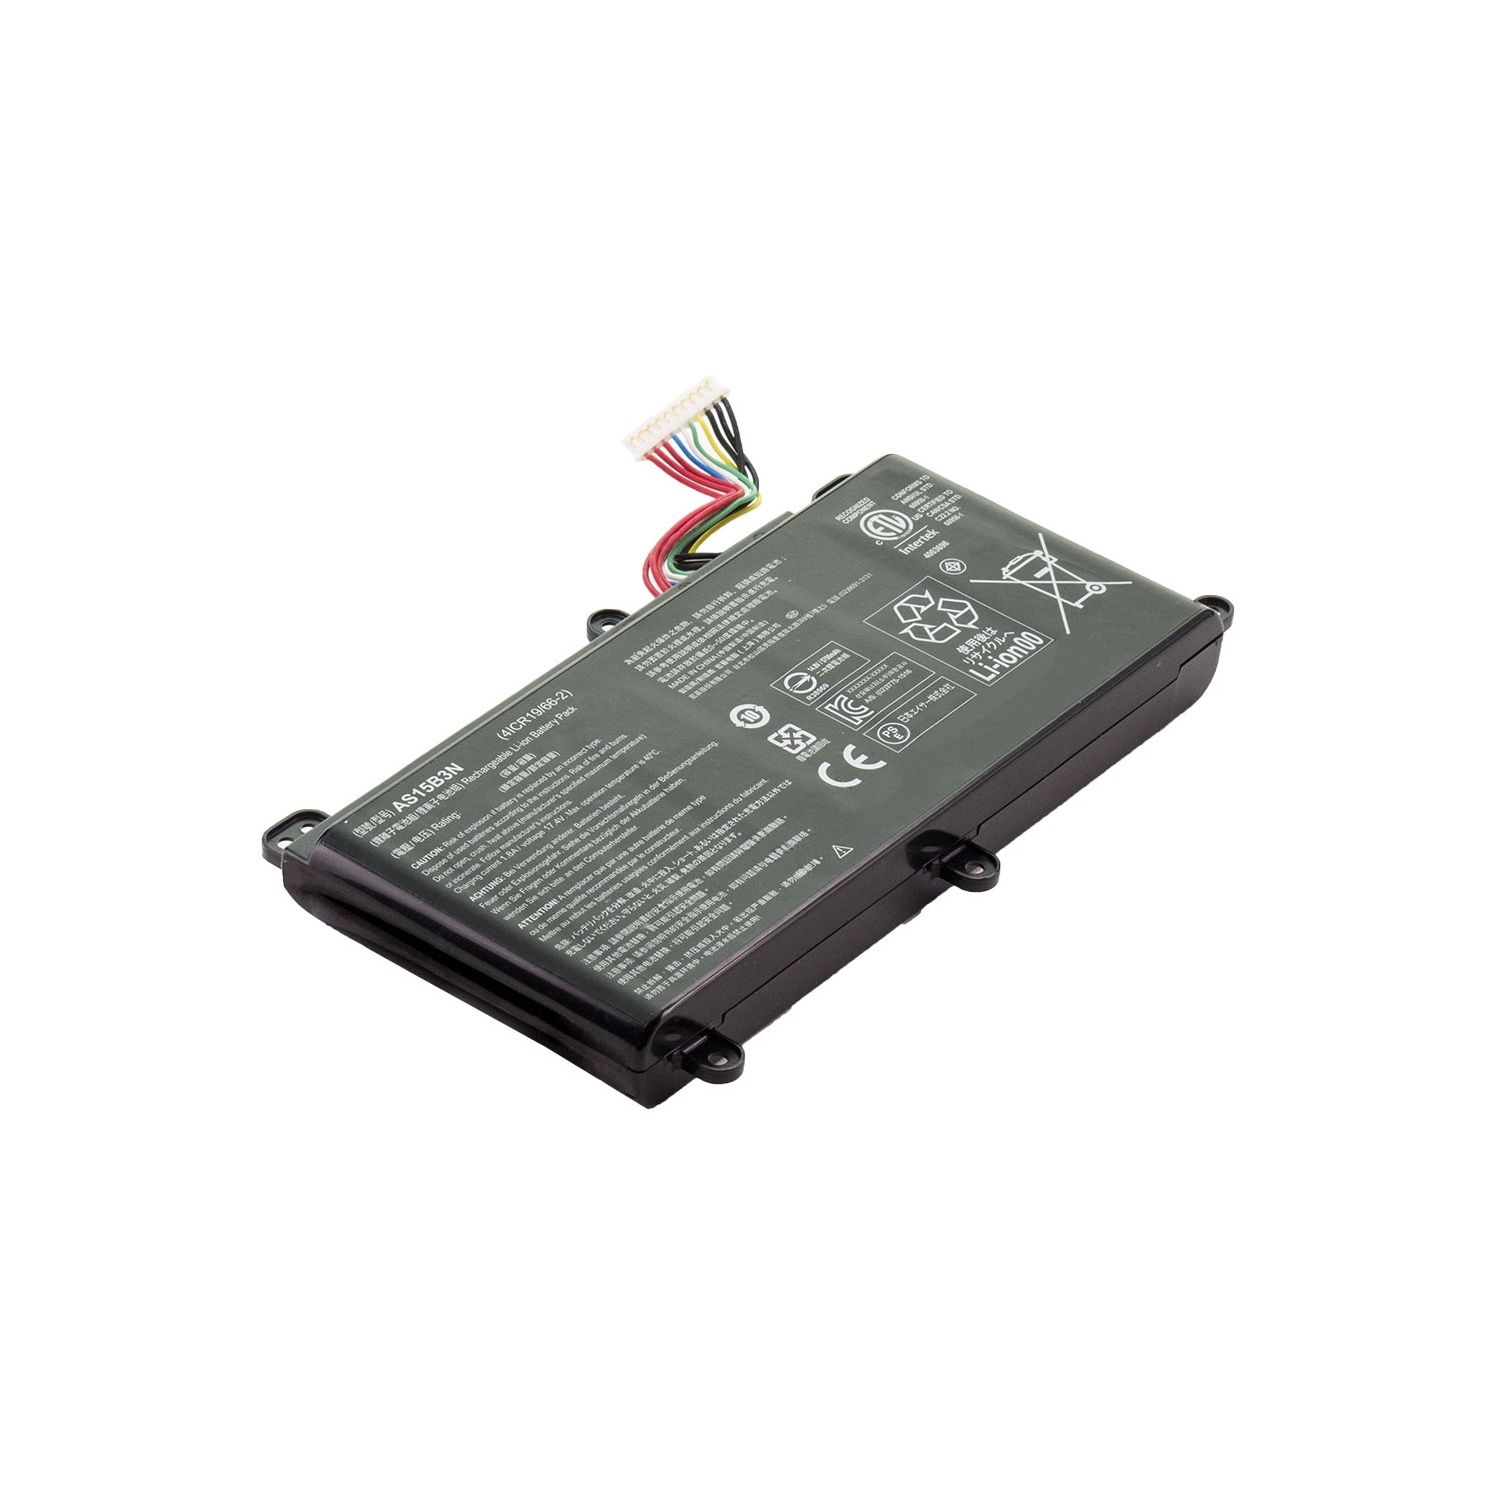 BATTDEPOT NEW Laptop Battery for Acer Predator 15 G9-593-77WF AS15B3N KT.00803.004 KT.00803.005